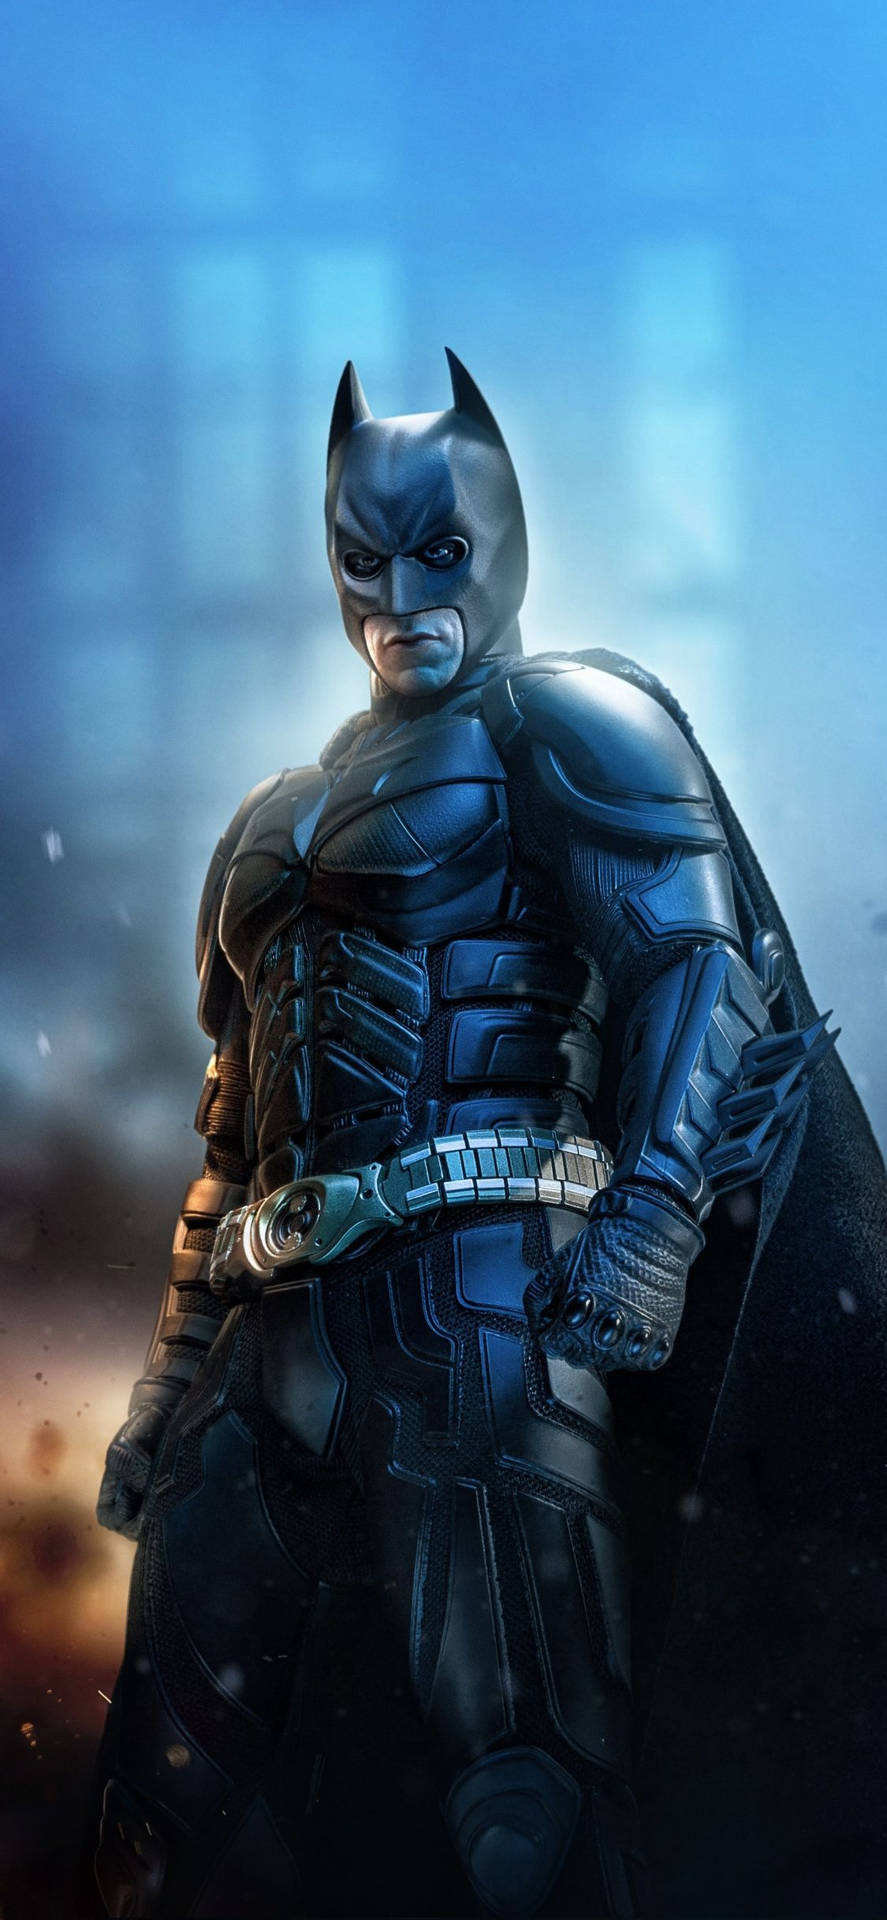 Wallpaperlysande Blå Batman Arkham Knight Iphone Bakgrundsbild. Wallpaper